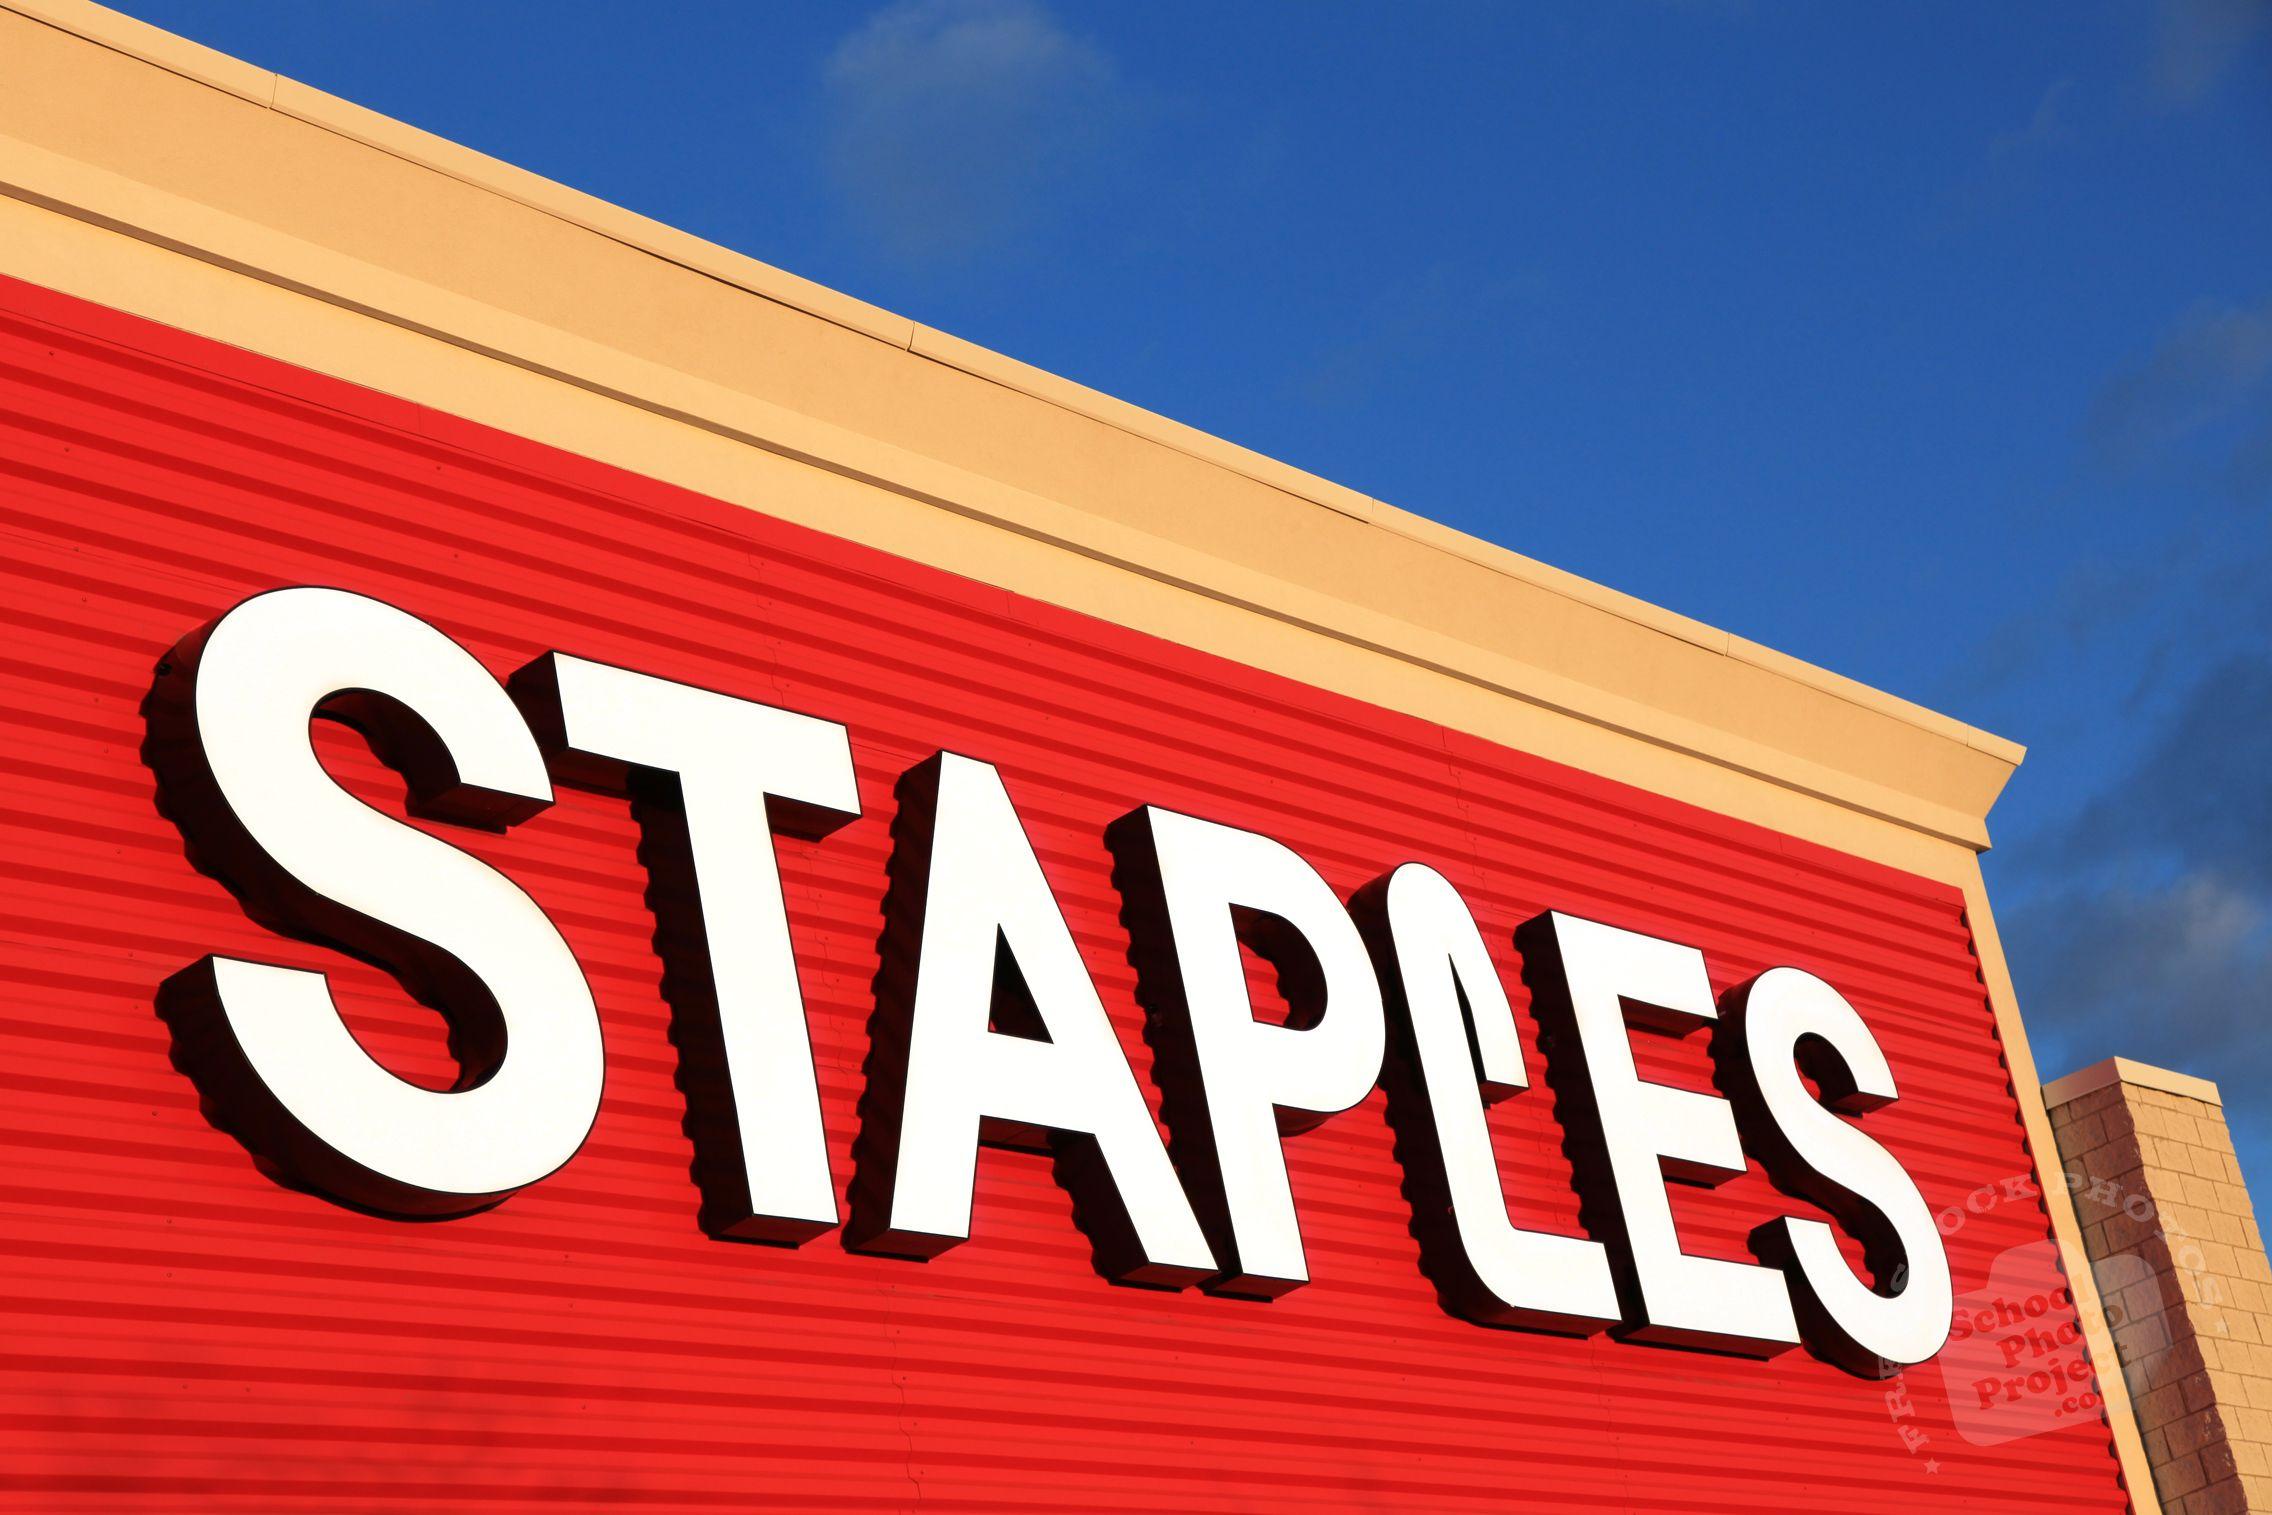 Staples Logo - FREE Staples Logo, Staples Office Supply Identity, Popular Company's